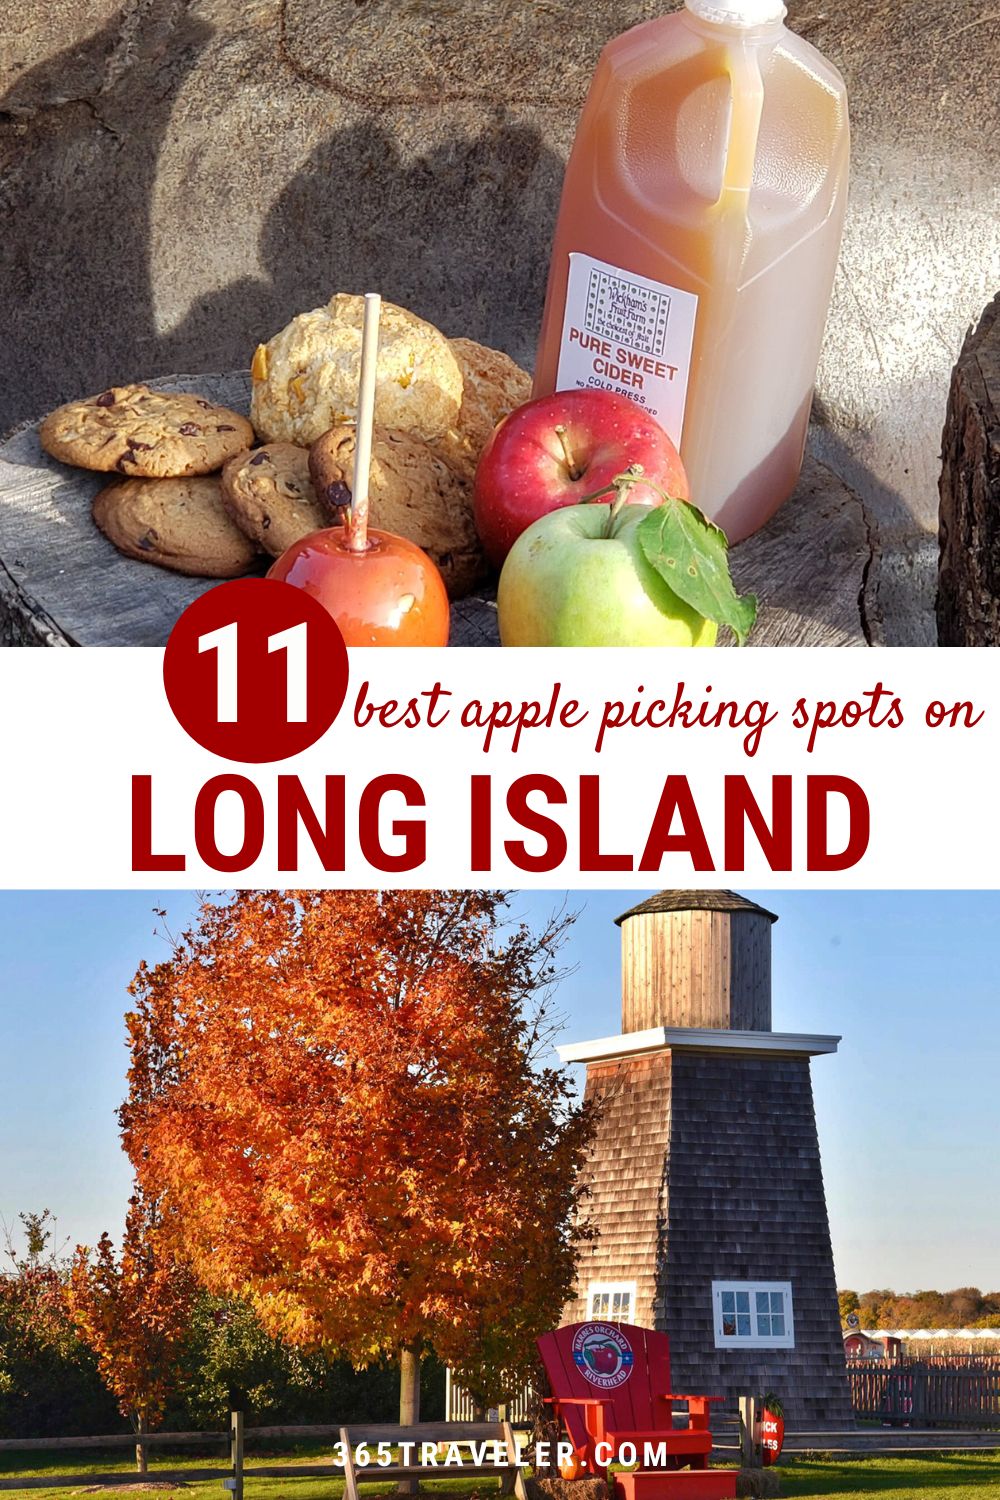 APPLE PICKING LONG ISLAND: 11 SPOTS YOU'LL LOVE